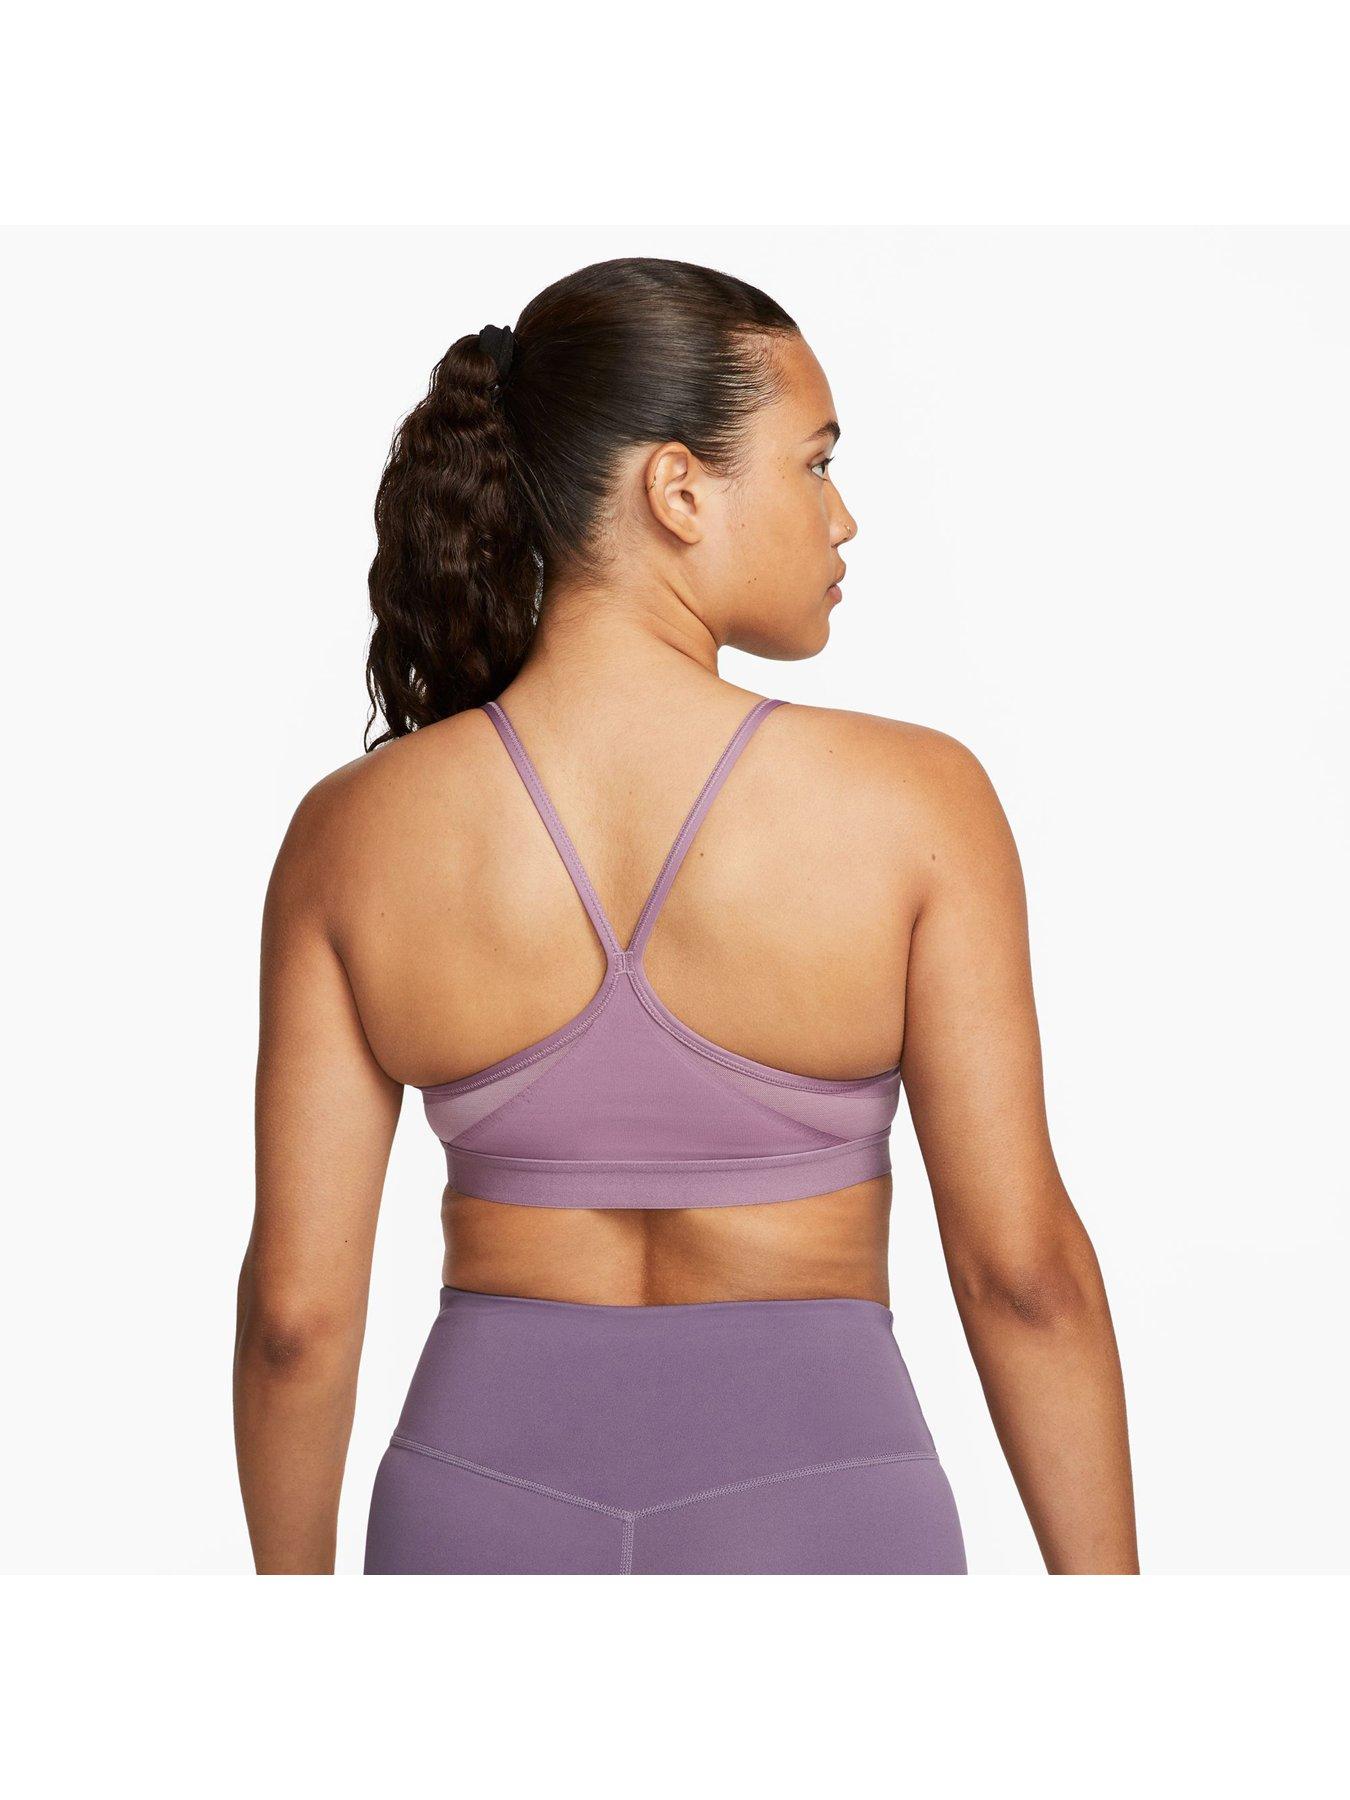 Nike Training Indy light support v-neck sports bra in dark pink